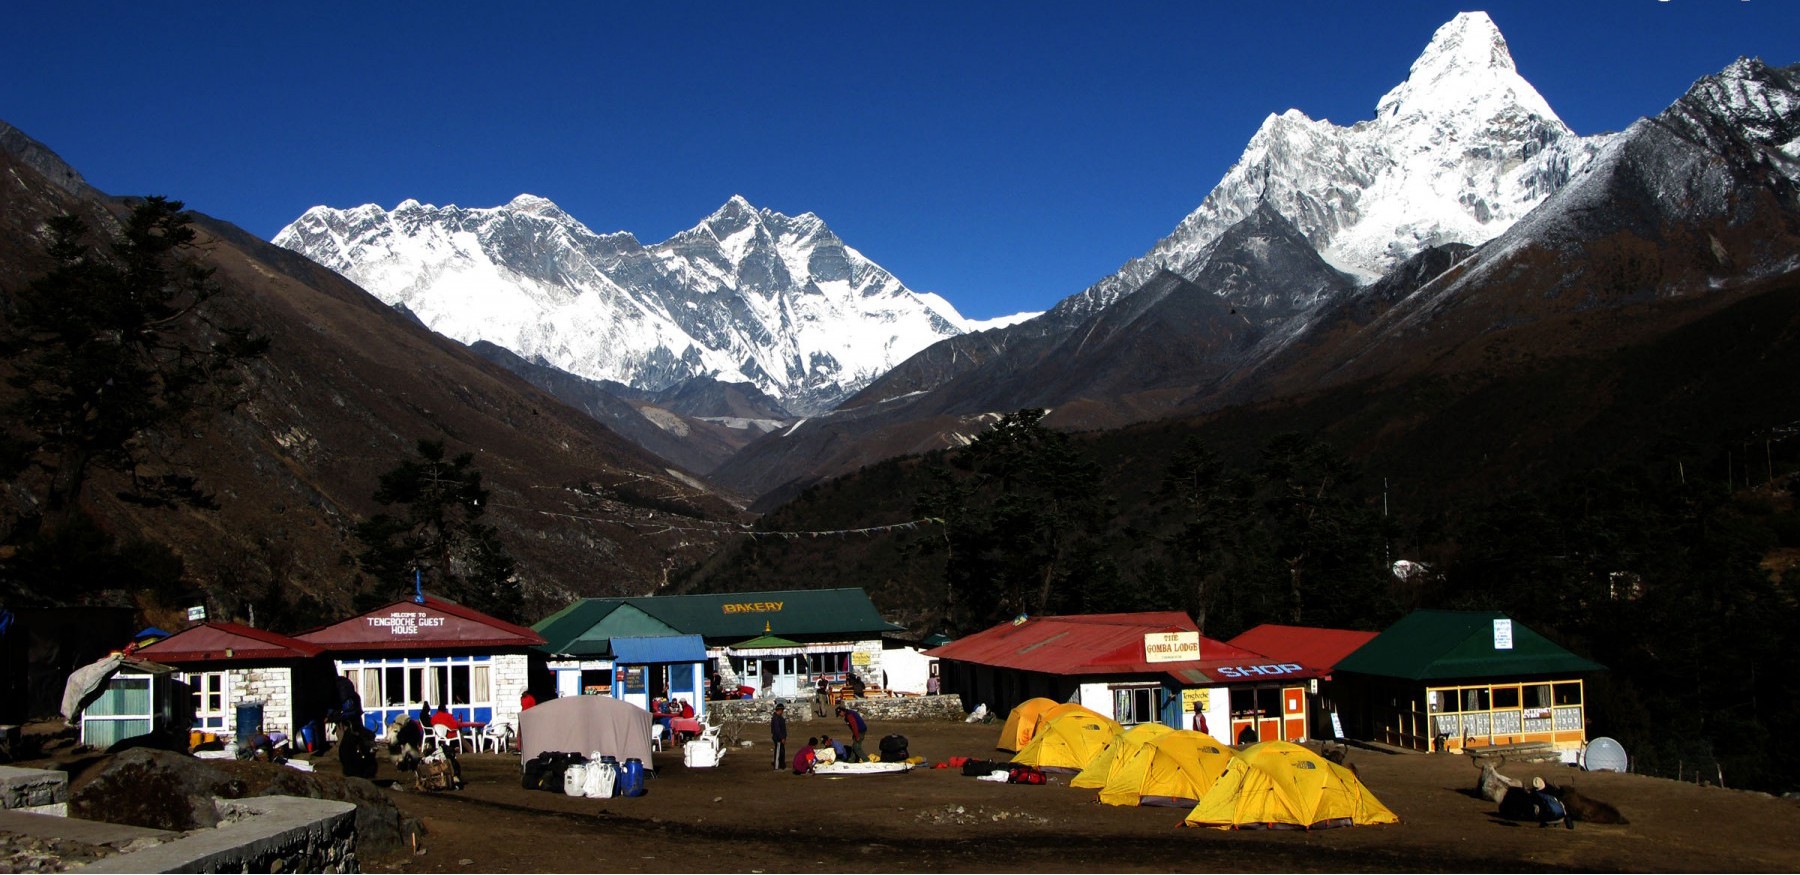 Everest Panorama